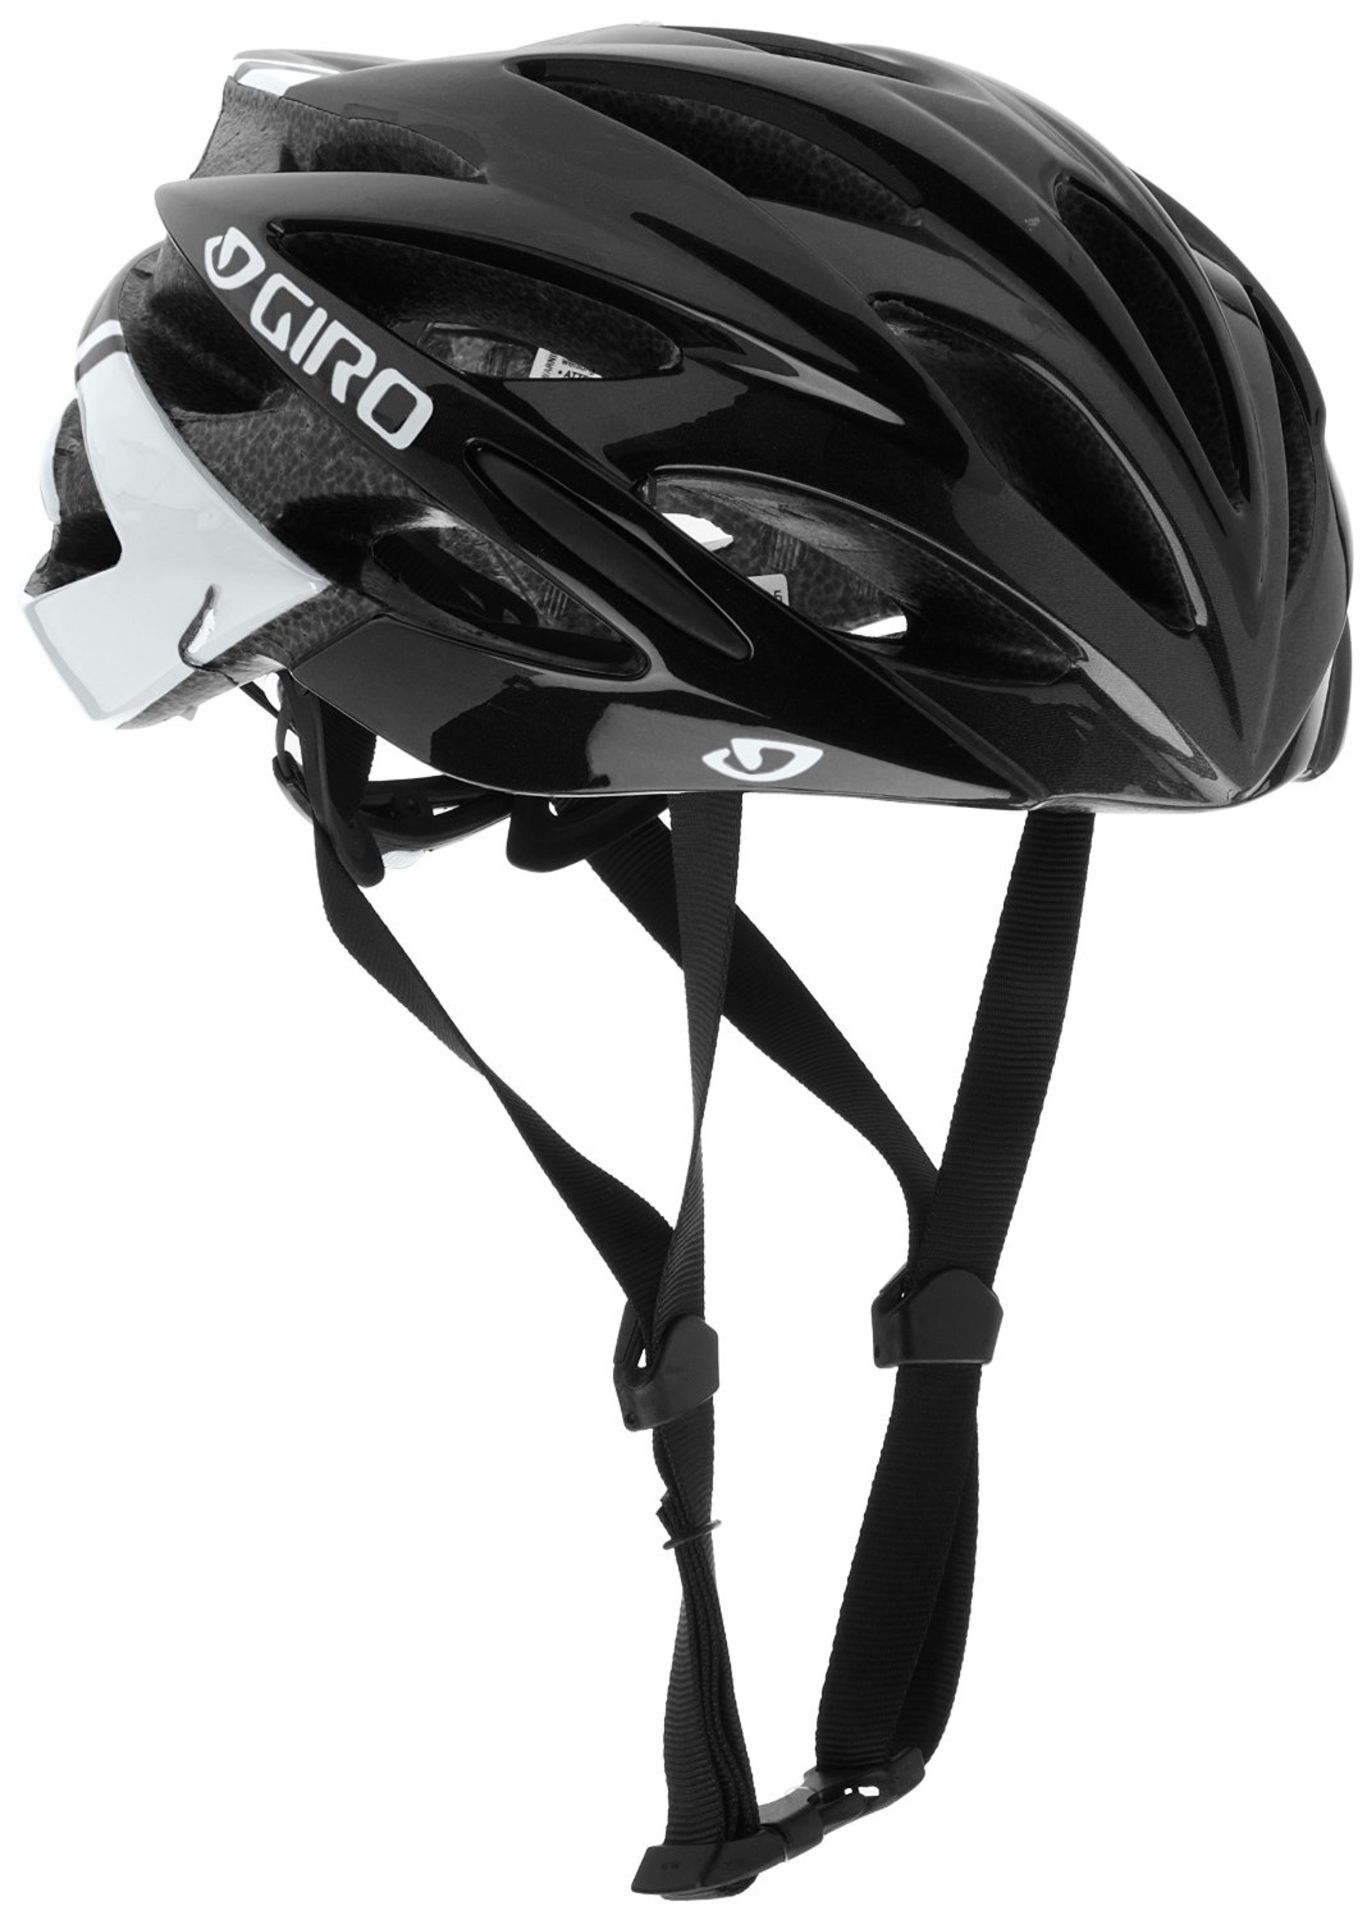 Giro Savant Road Bike Helmet RRP £89.99 XL